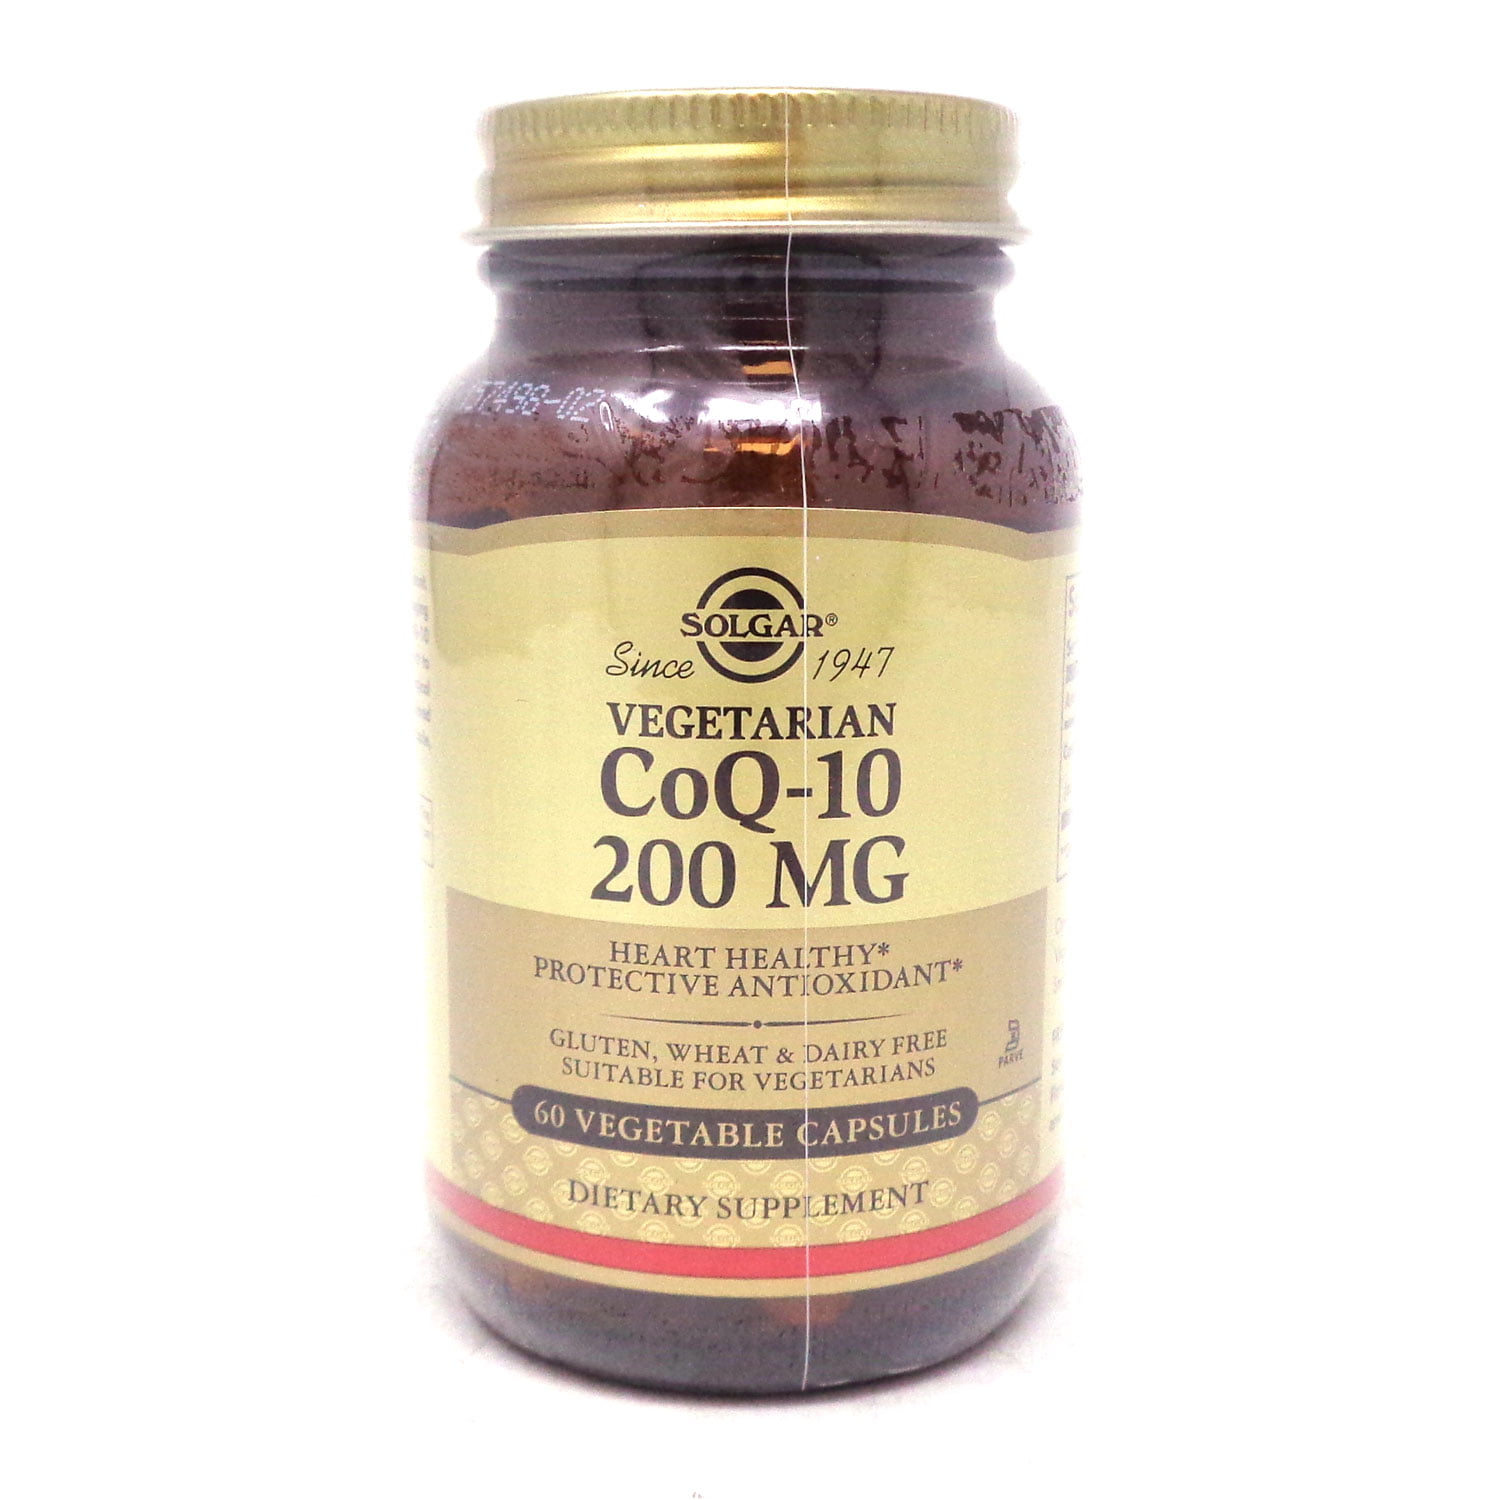 Solgar Vegetarian CoQ-10 200 mg, 60 Vegetable Capsules - Heart Healthy, Protective Antioxidant - Coenzyme Q10 (CoQ-10) Supplement - Vegan, Gluten Free, Dairy Free, Kosher - 60 Servings